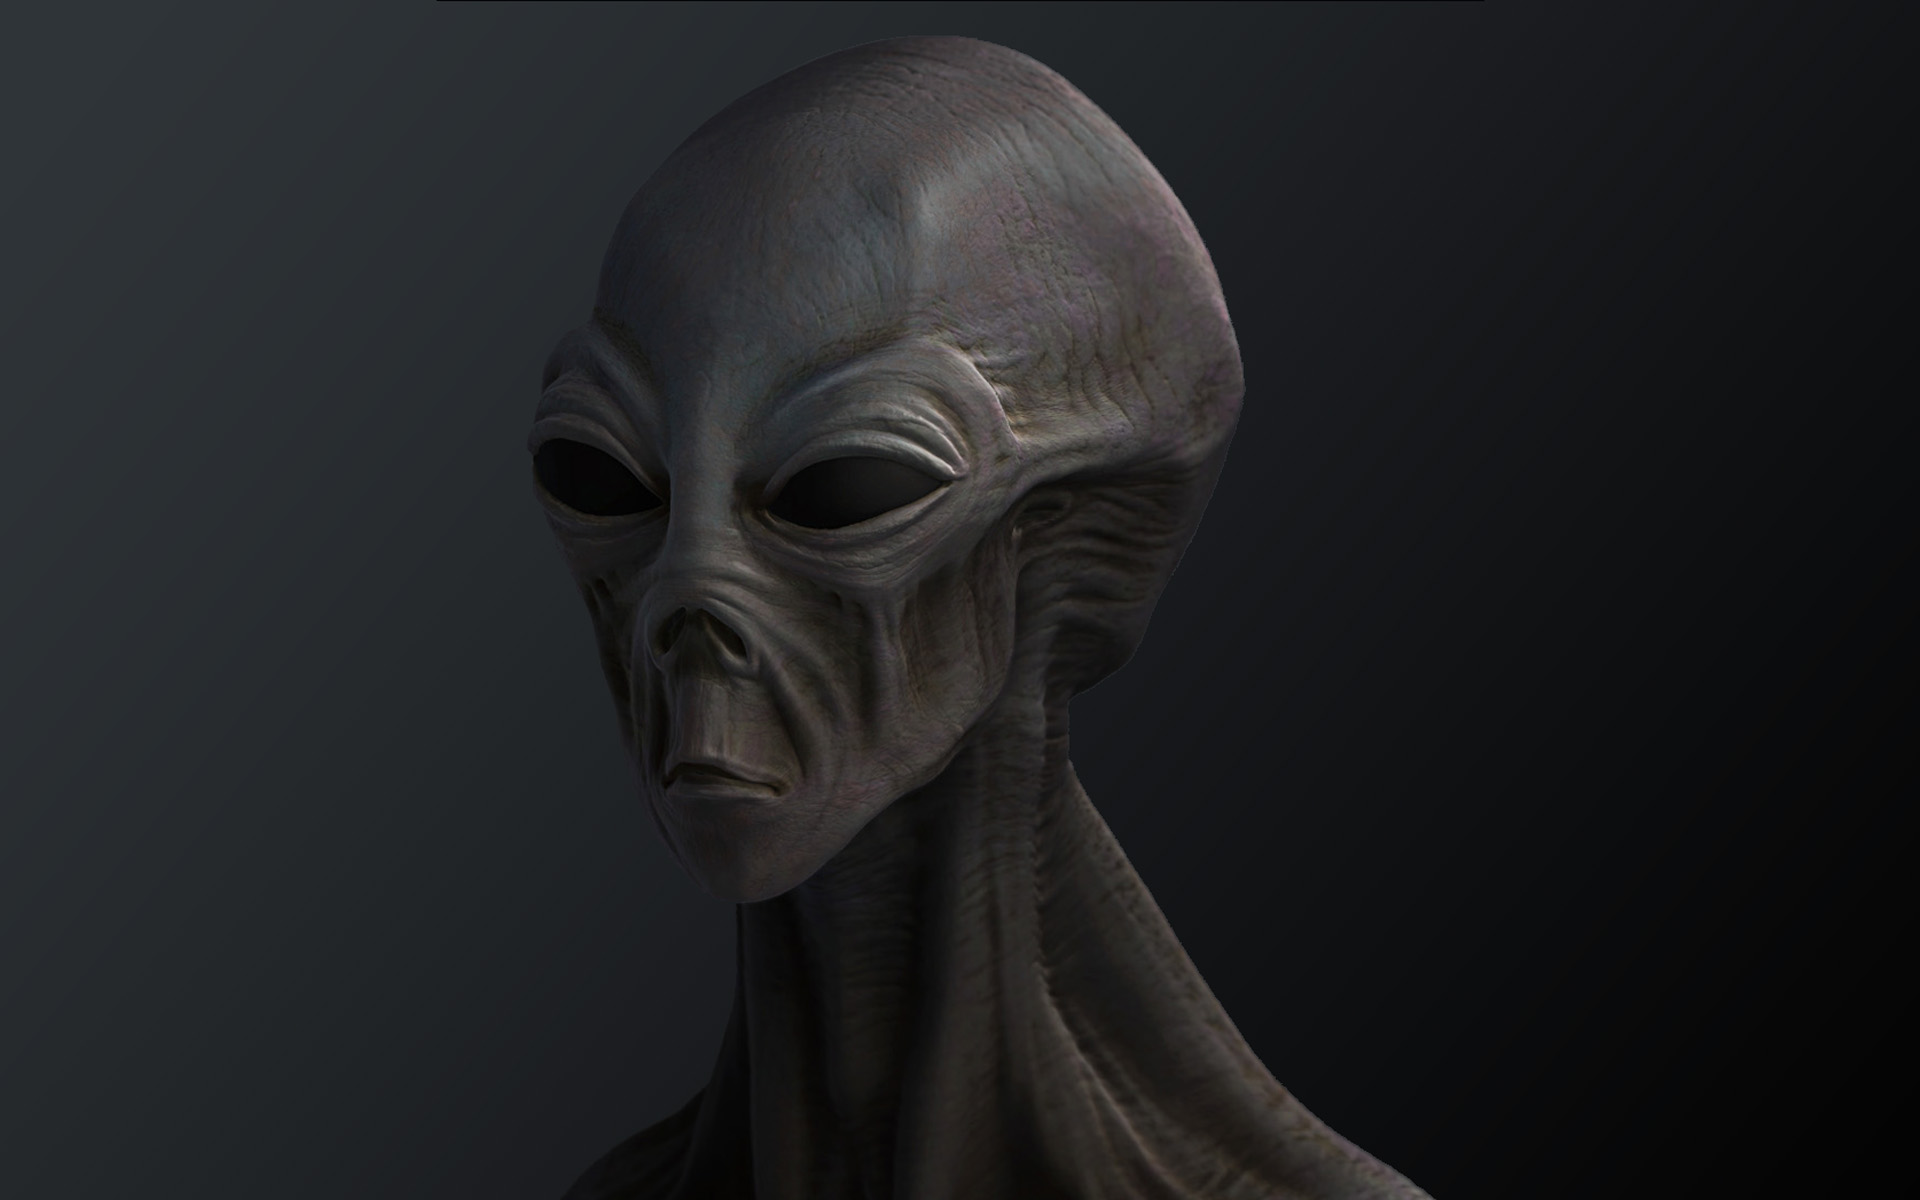 Alien - desktop wallpaper